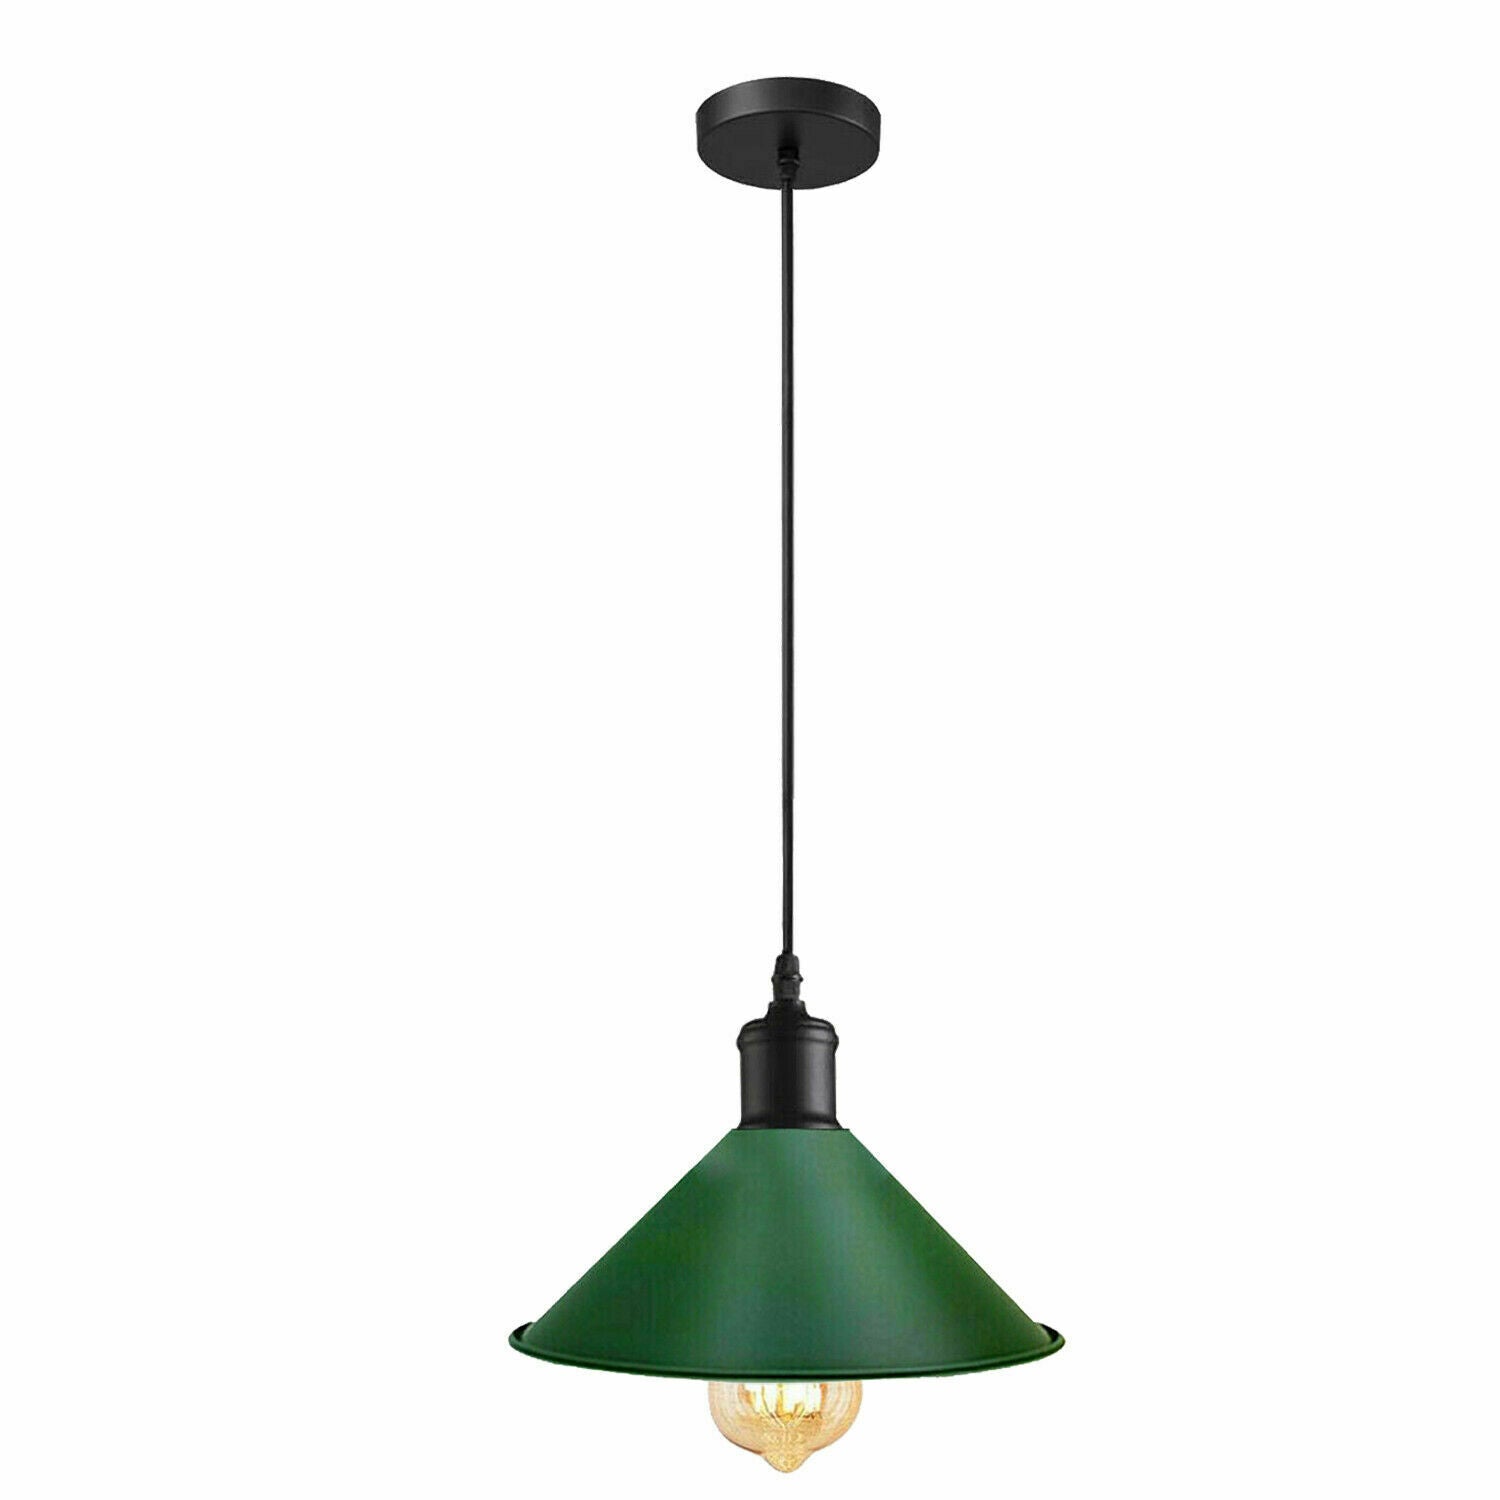 Green Pendant Lamp Industrial style Decorative Ceiling lamp~1538 - LEDSone UK Ltd